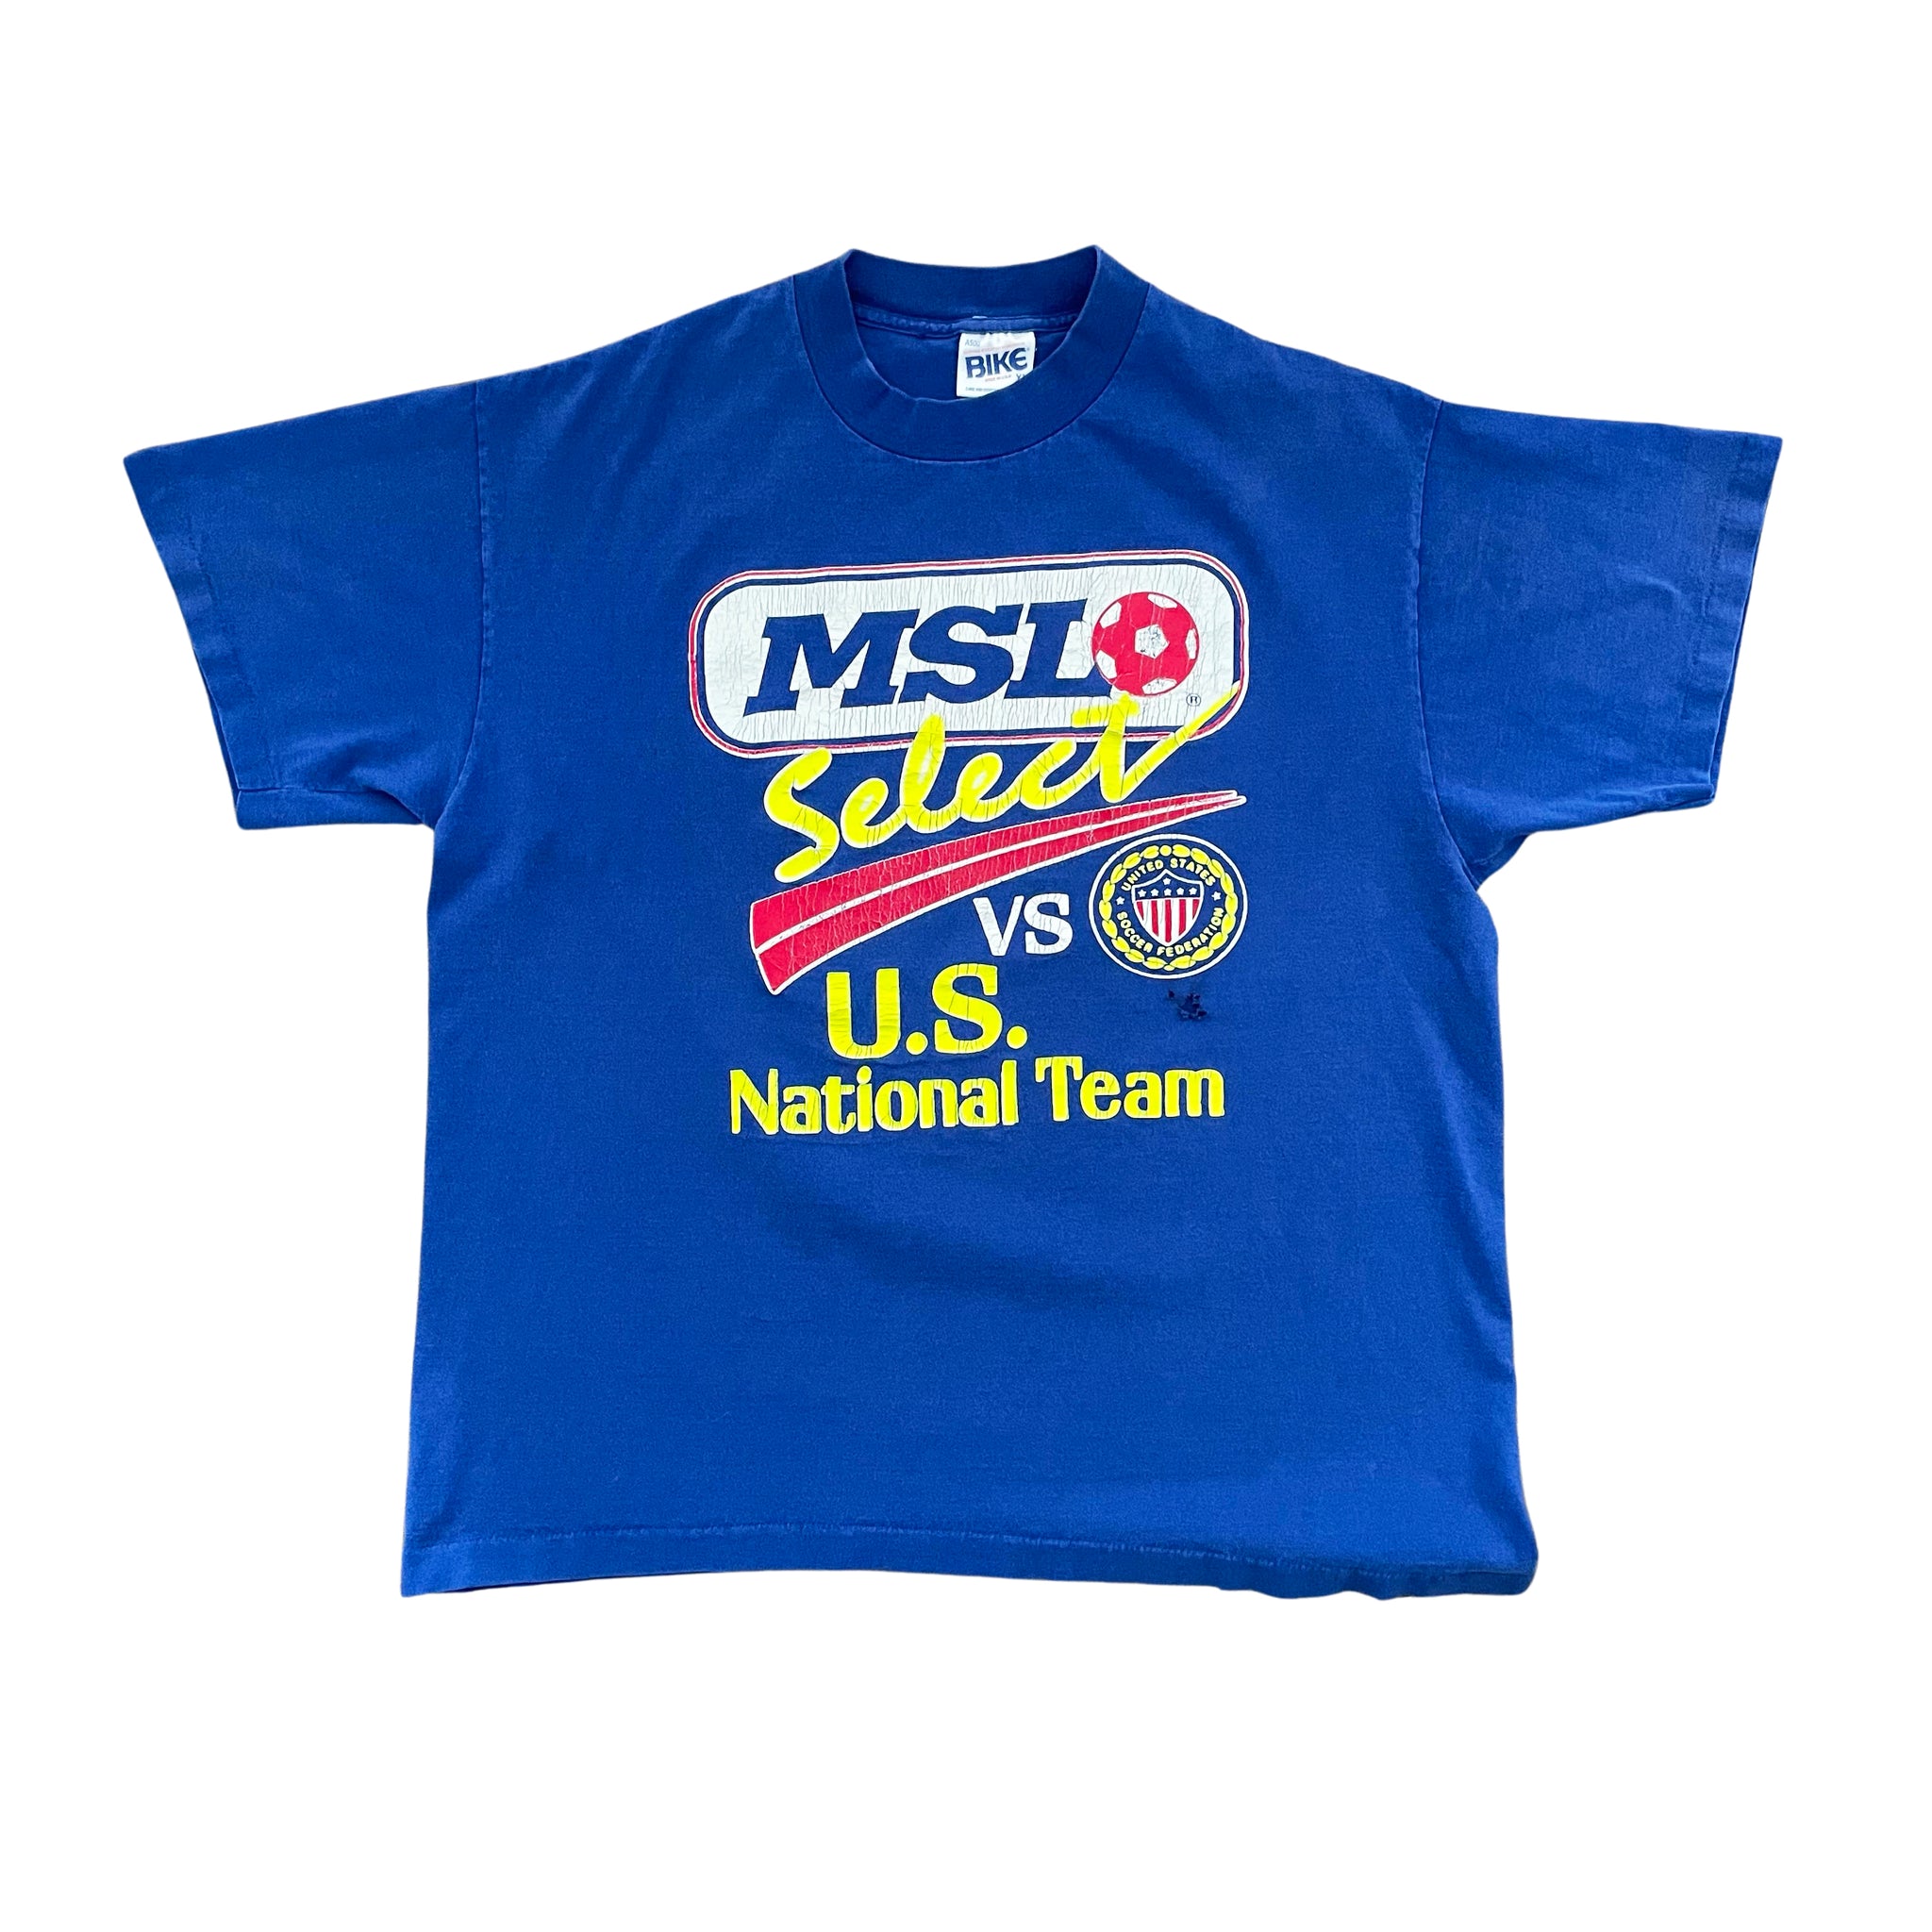 1990 MSL Select vs. USA T-Shirt - L